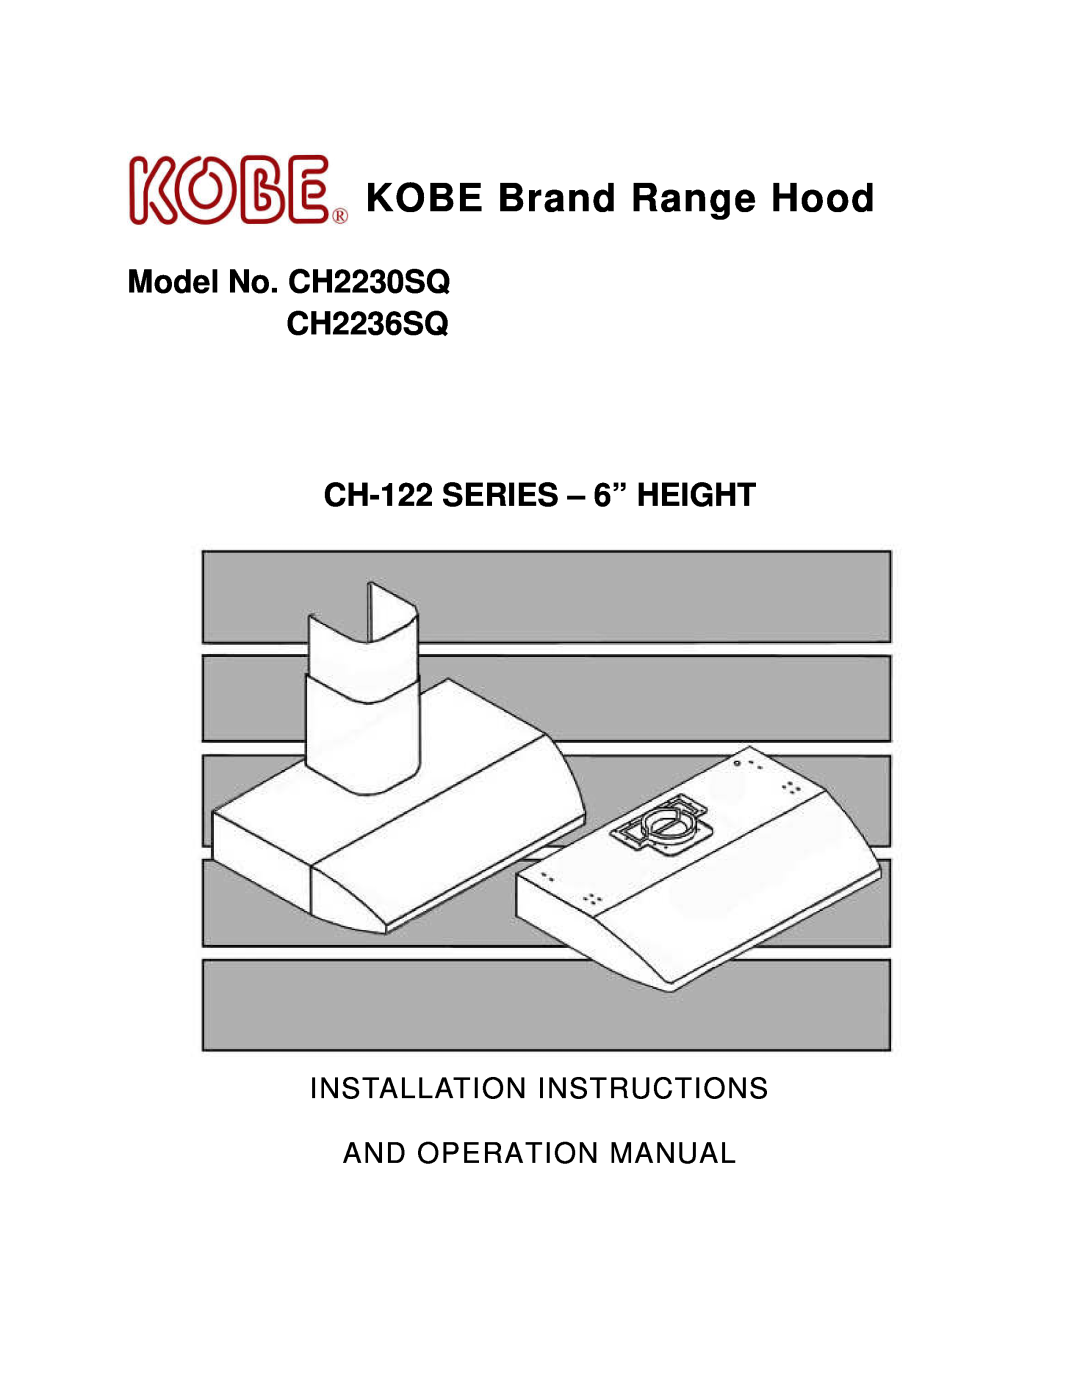 Kobe Range Hoods manual KOBE Brand Range Hood, Model No. CH2230SQ CH2236SQ CH-122 SERIES 6 HEIGHT 